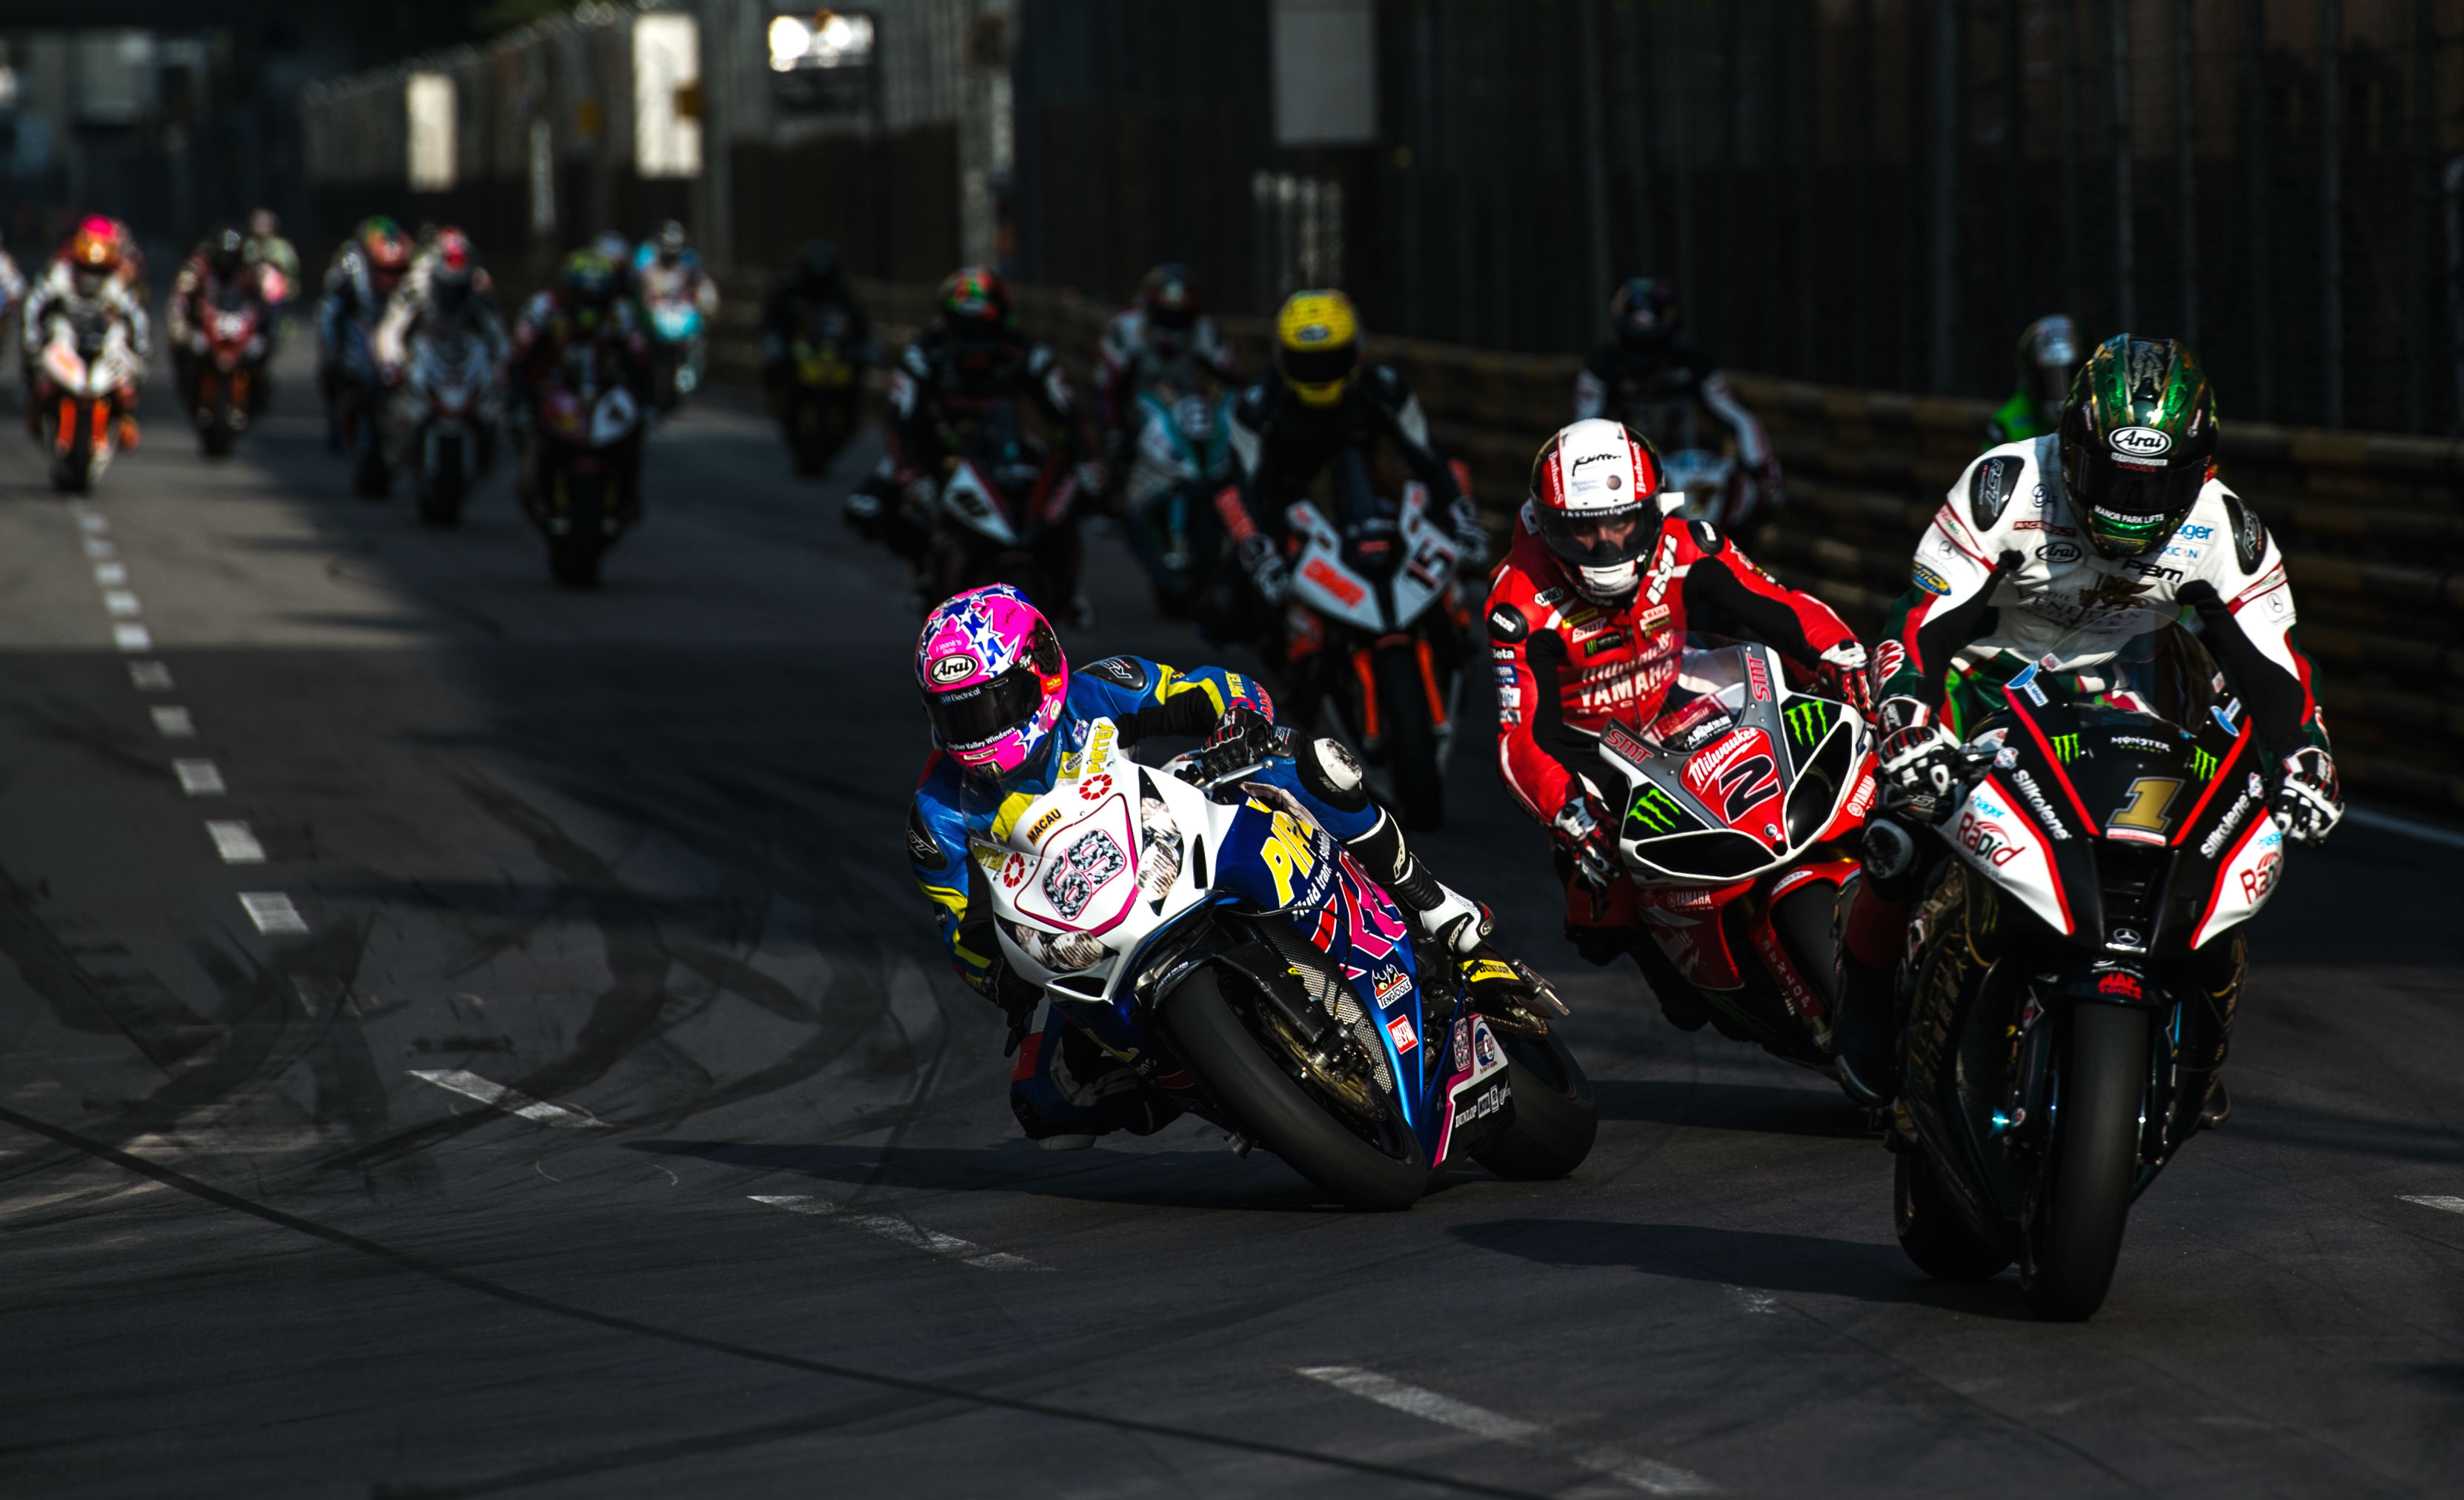 2015 Macau Motorcycle Grand Prix entry list released